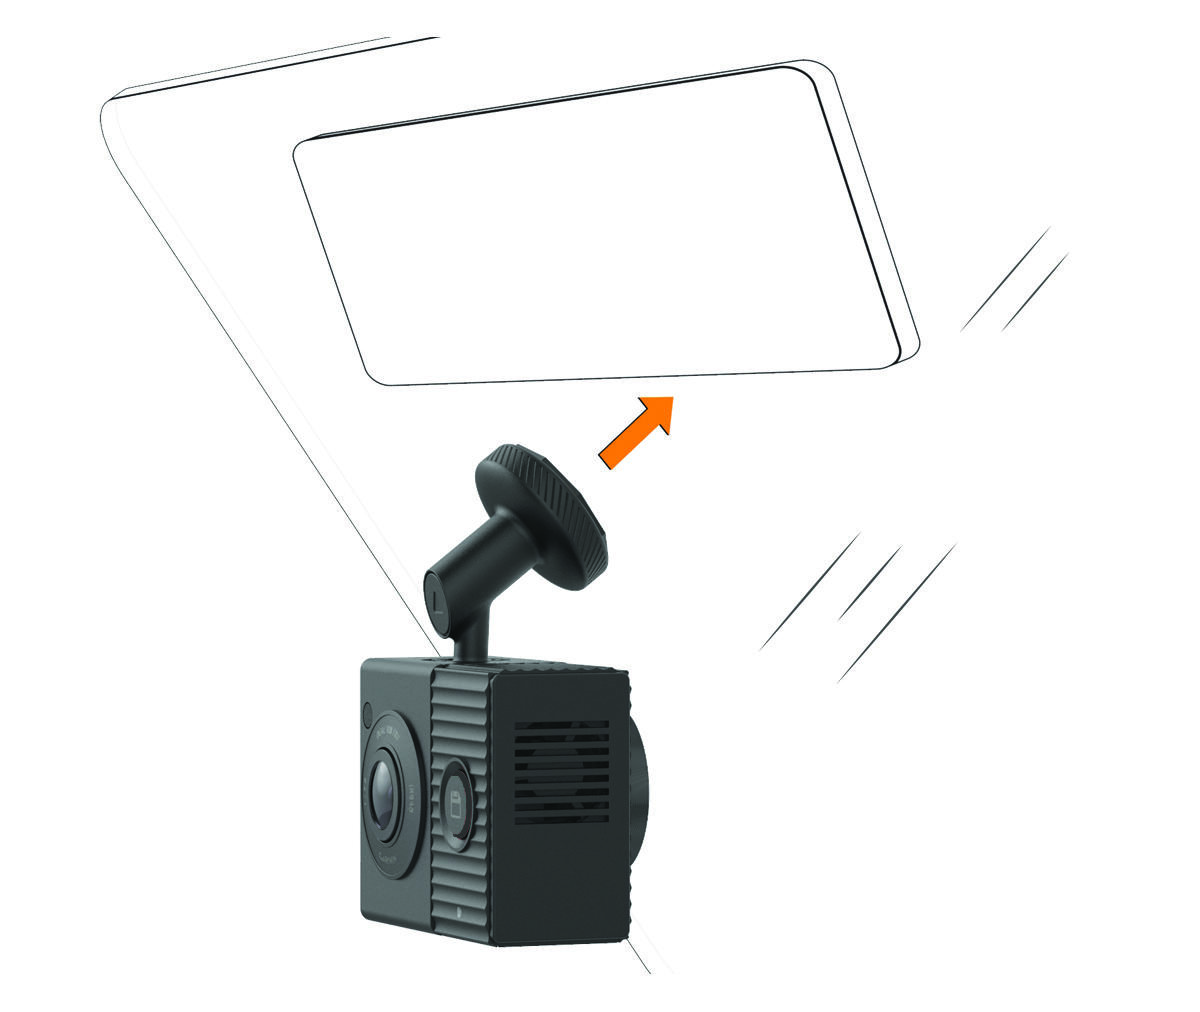 Garmin Dash Cam Mini 2 - Installing the Device on Your Windshield